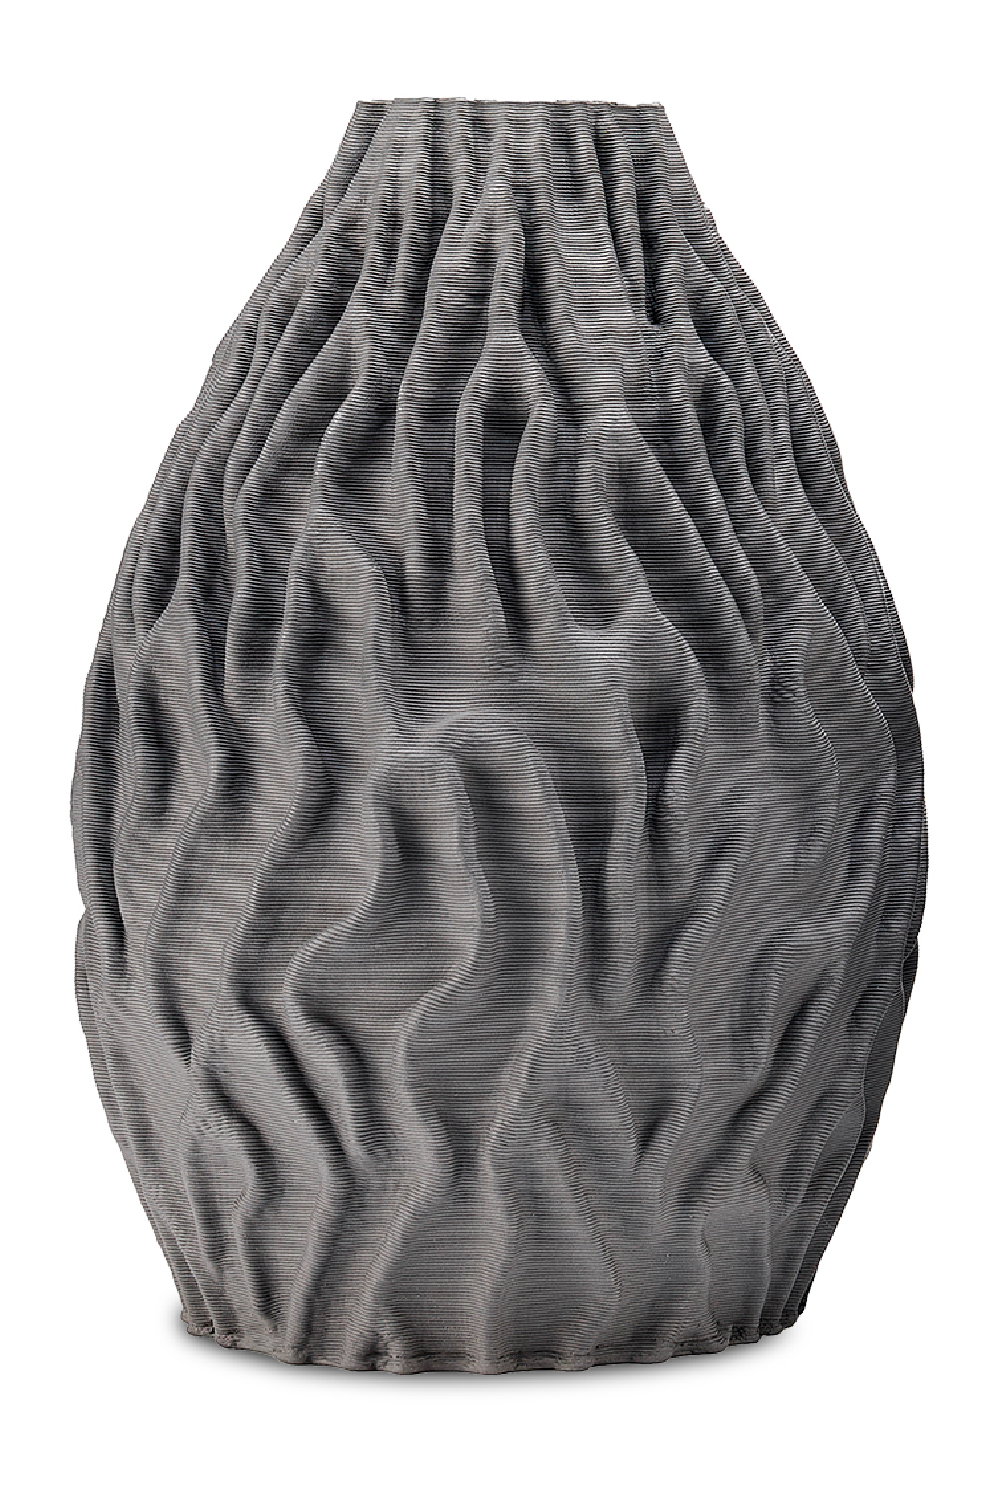 Gray 3D Printed Ceramic Vase | Liang & Eimil Nara | Oroa.com